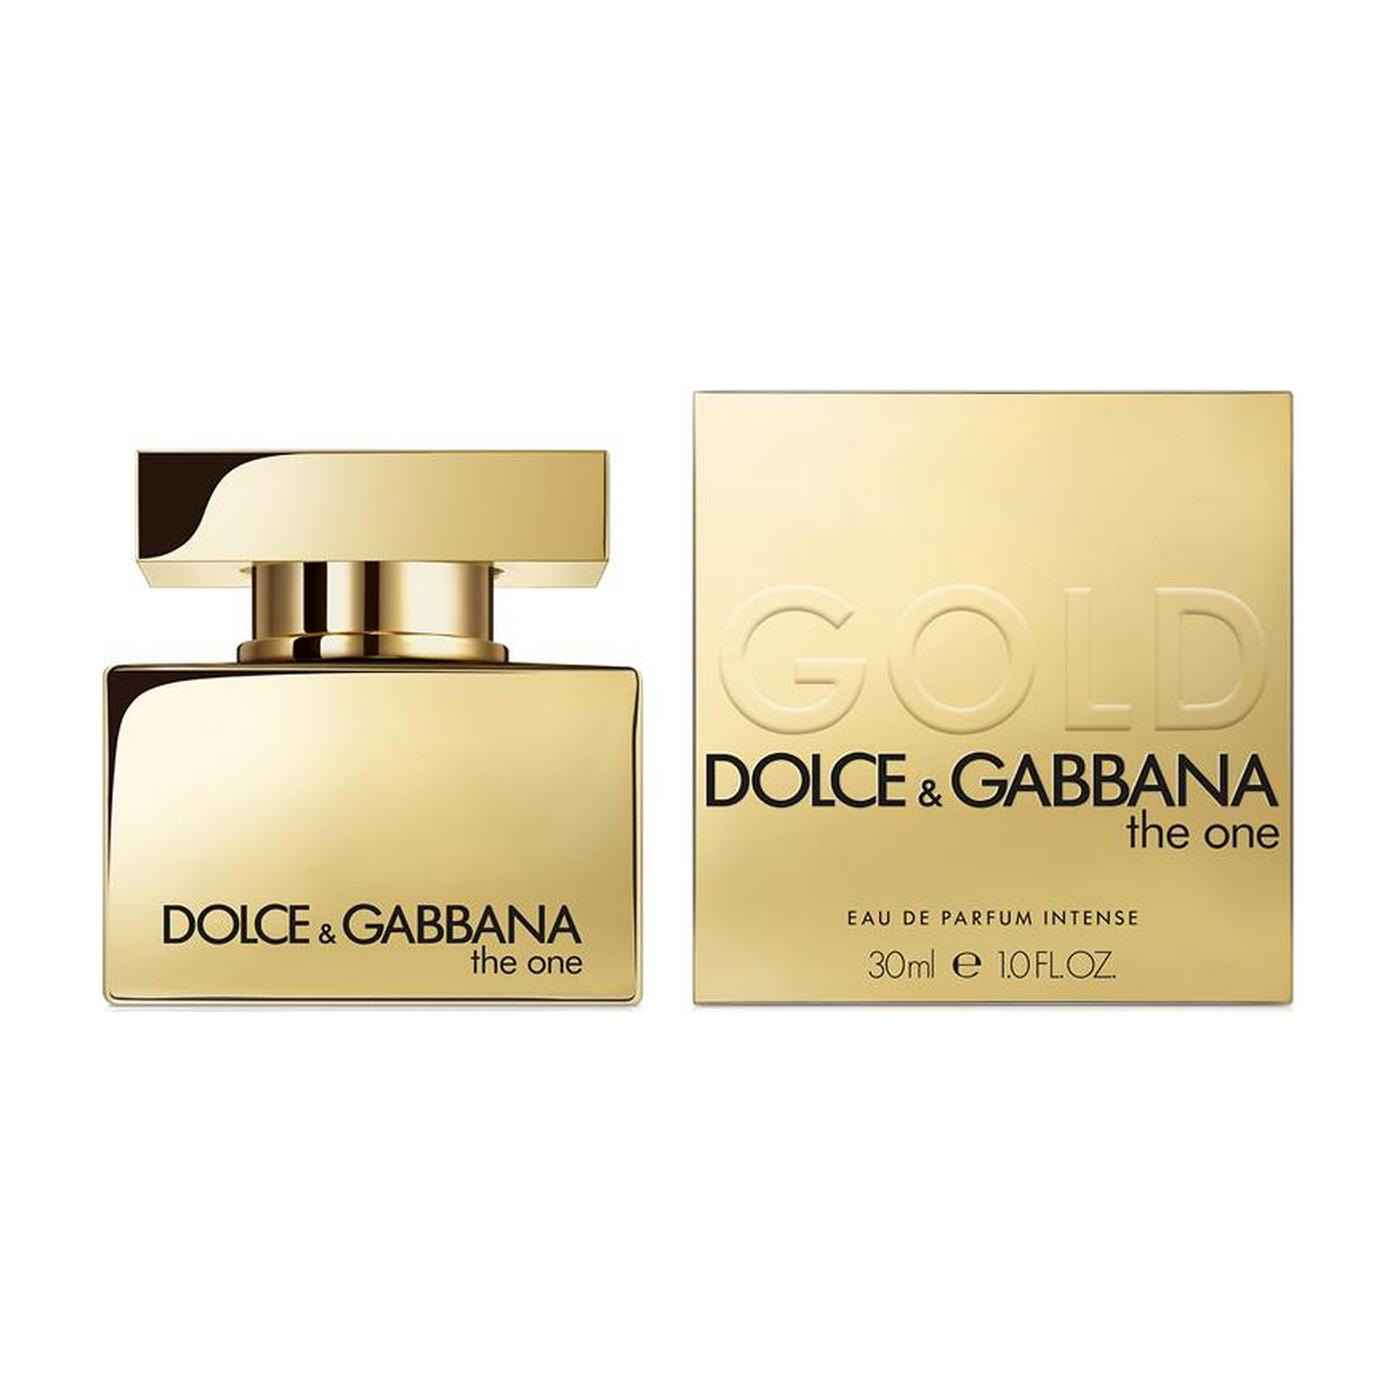 Дольче габбана ван отзывы. Dolce Gabbana the one Gold intense. Dolce Gabbana the one 75 ml. Дольче Габбана оне Голд Интенс. Dolce Gabbana the one Gold intense женские.